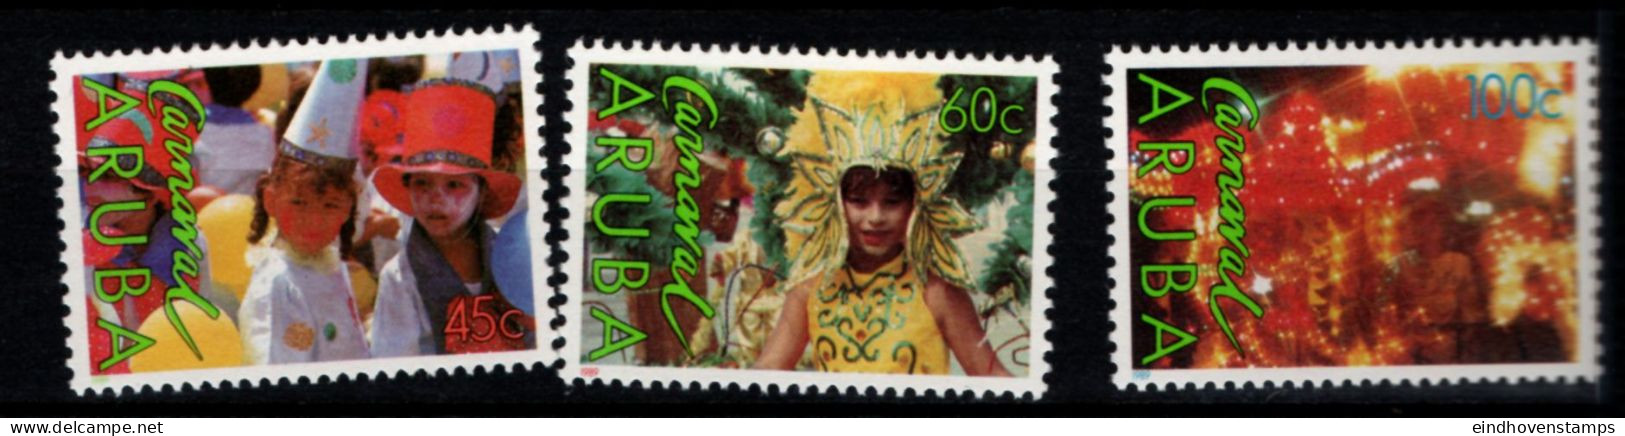 Aruba 1989 Carnaval 3 Values MNH Scenes - Carnavales